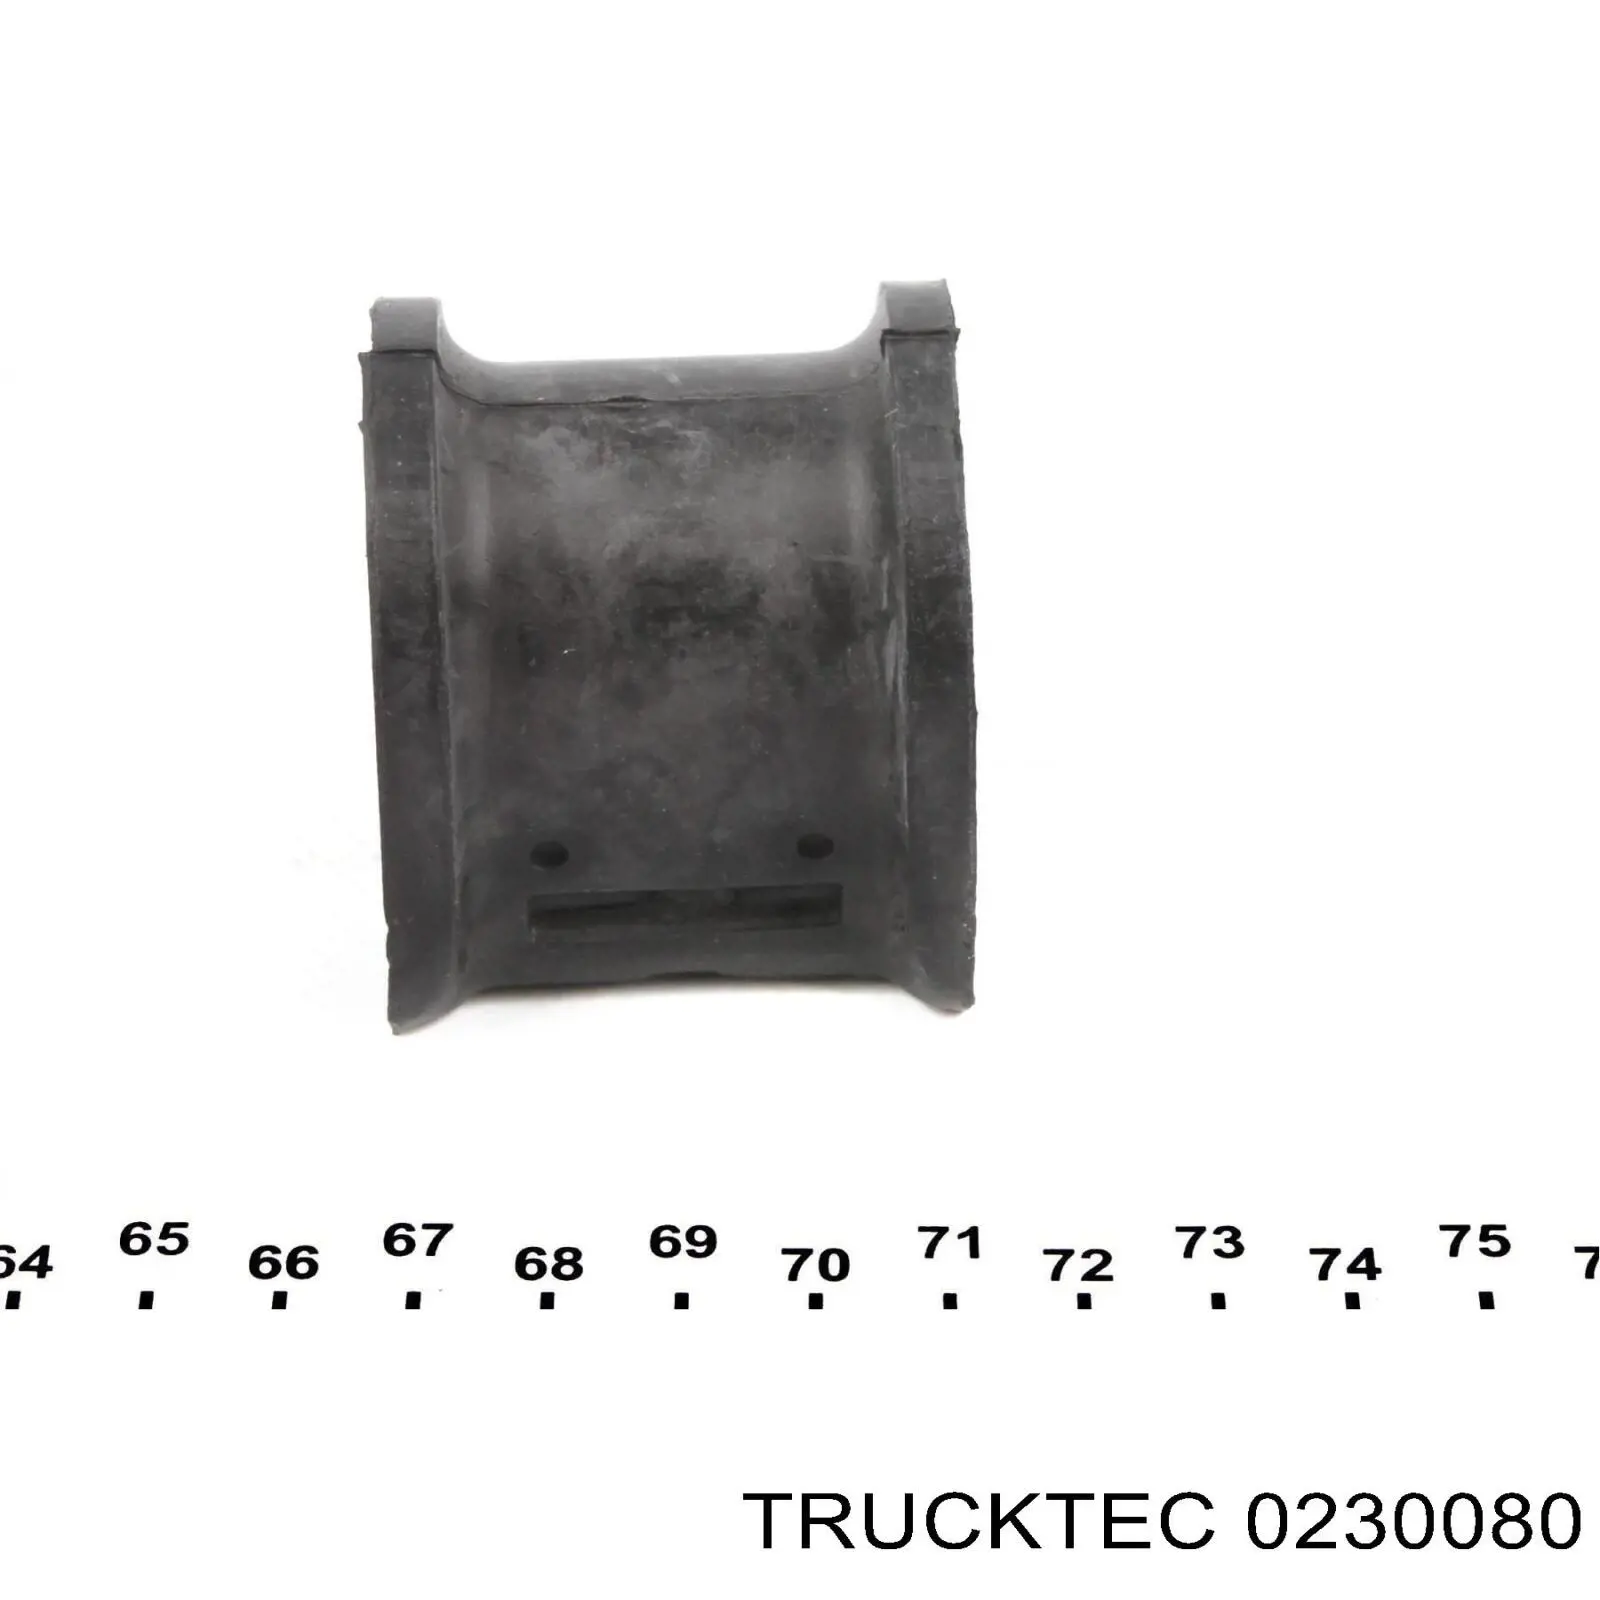 02.30.080 Trucktec casquillo de barra estabilizadora delantera